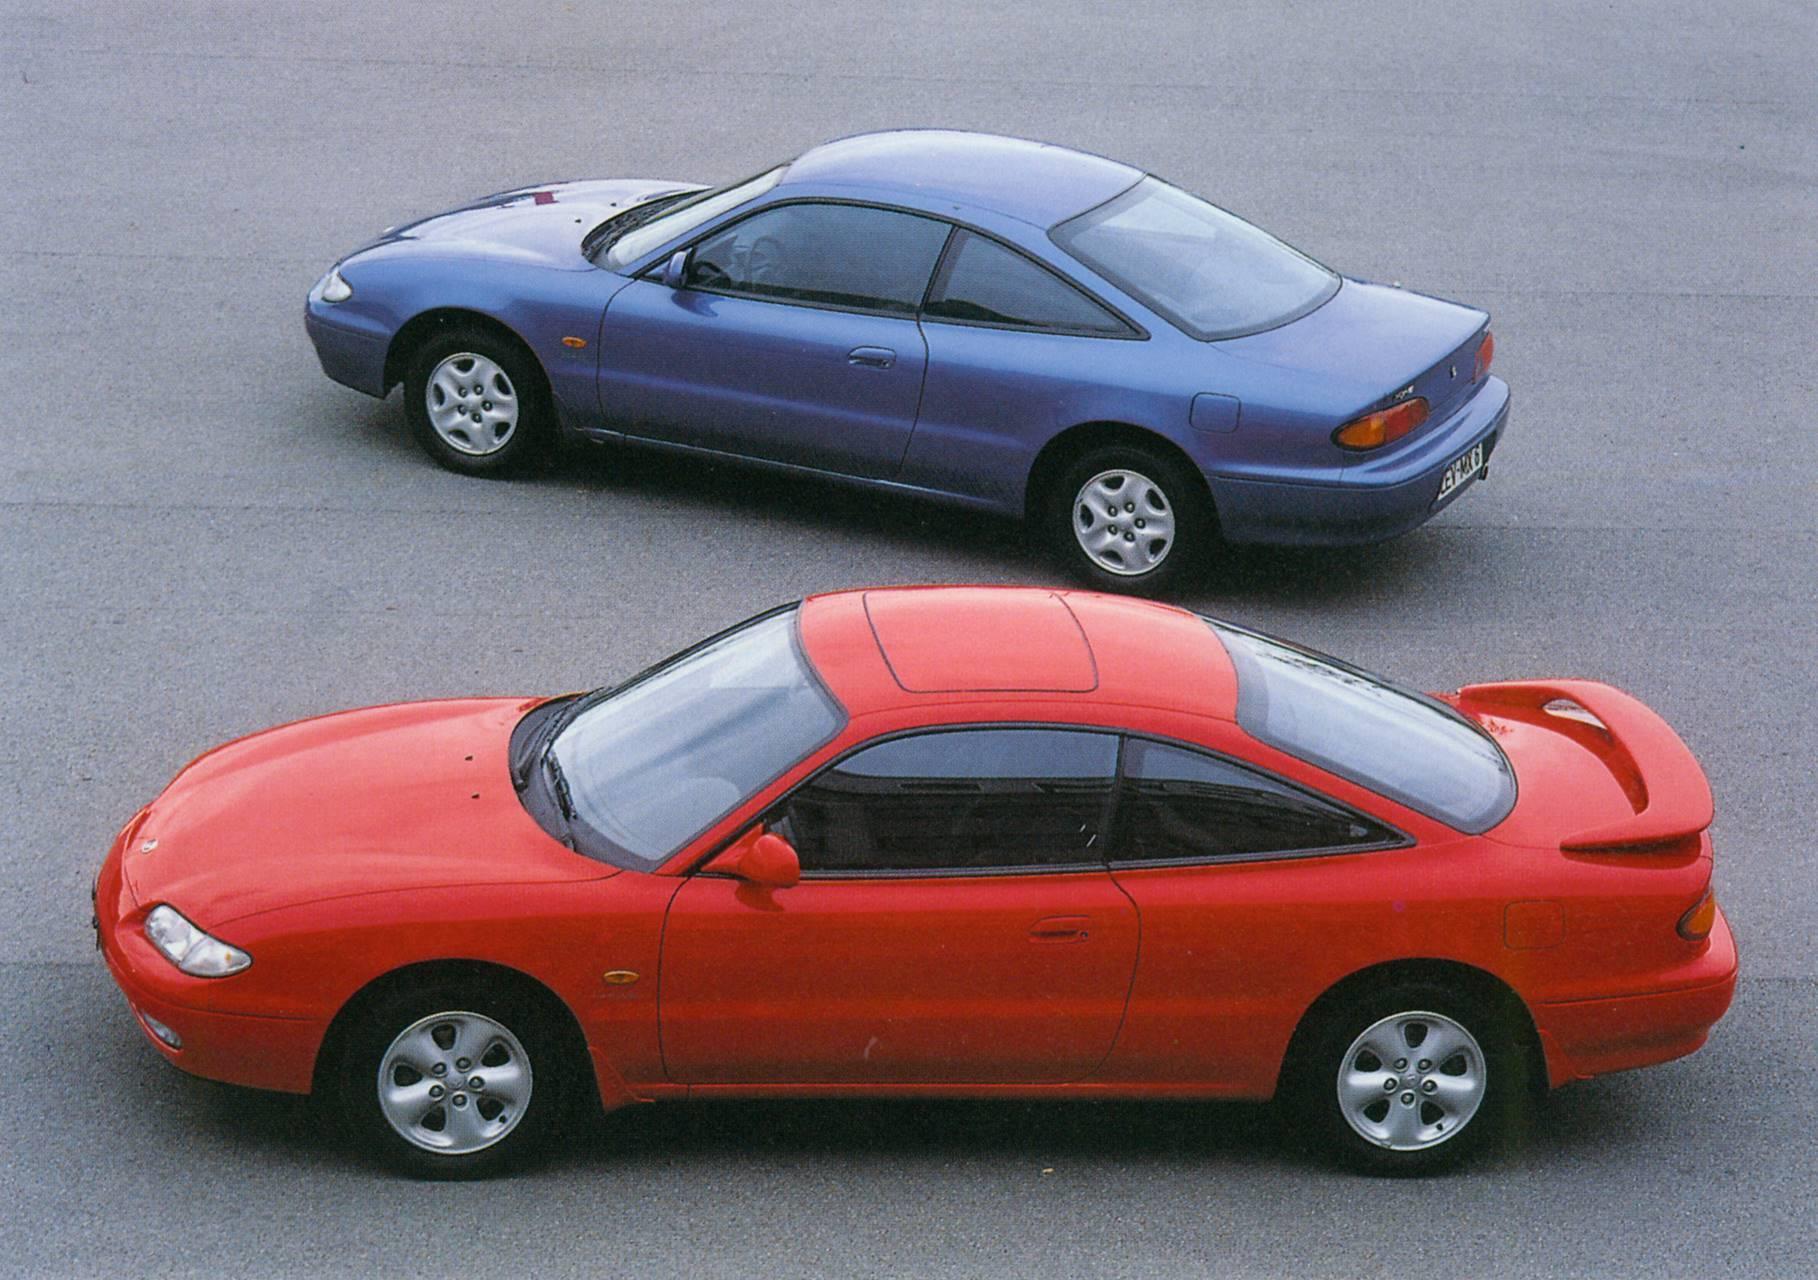 1992 Mazda MX-6 - conceptcarz.com